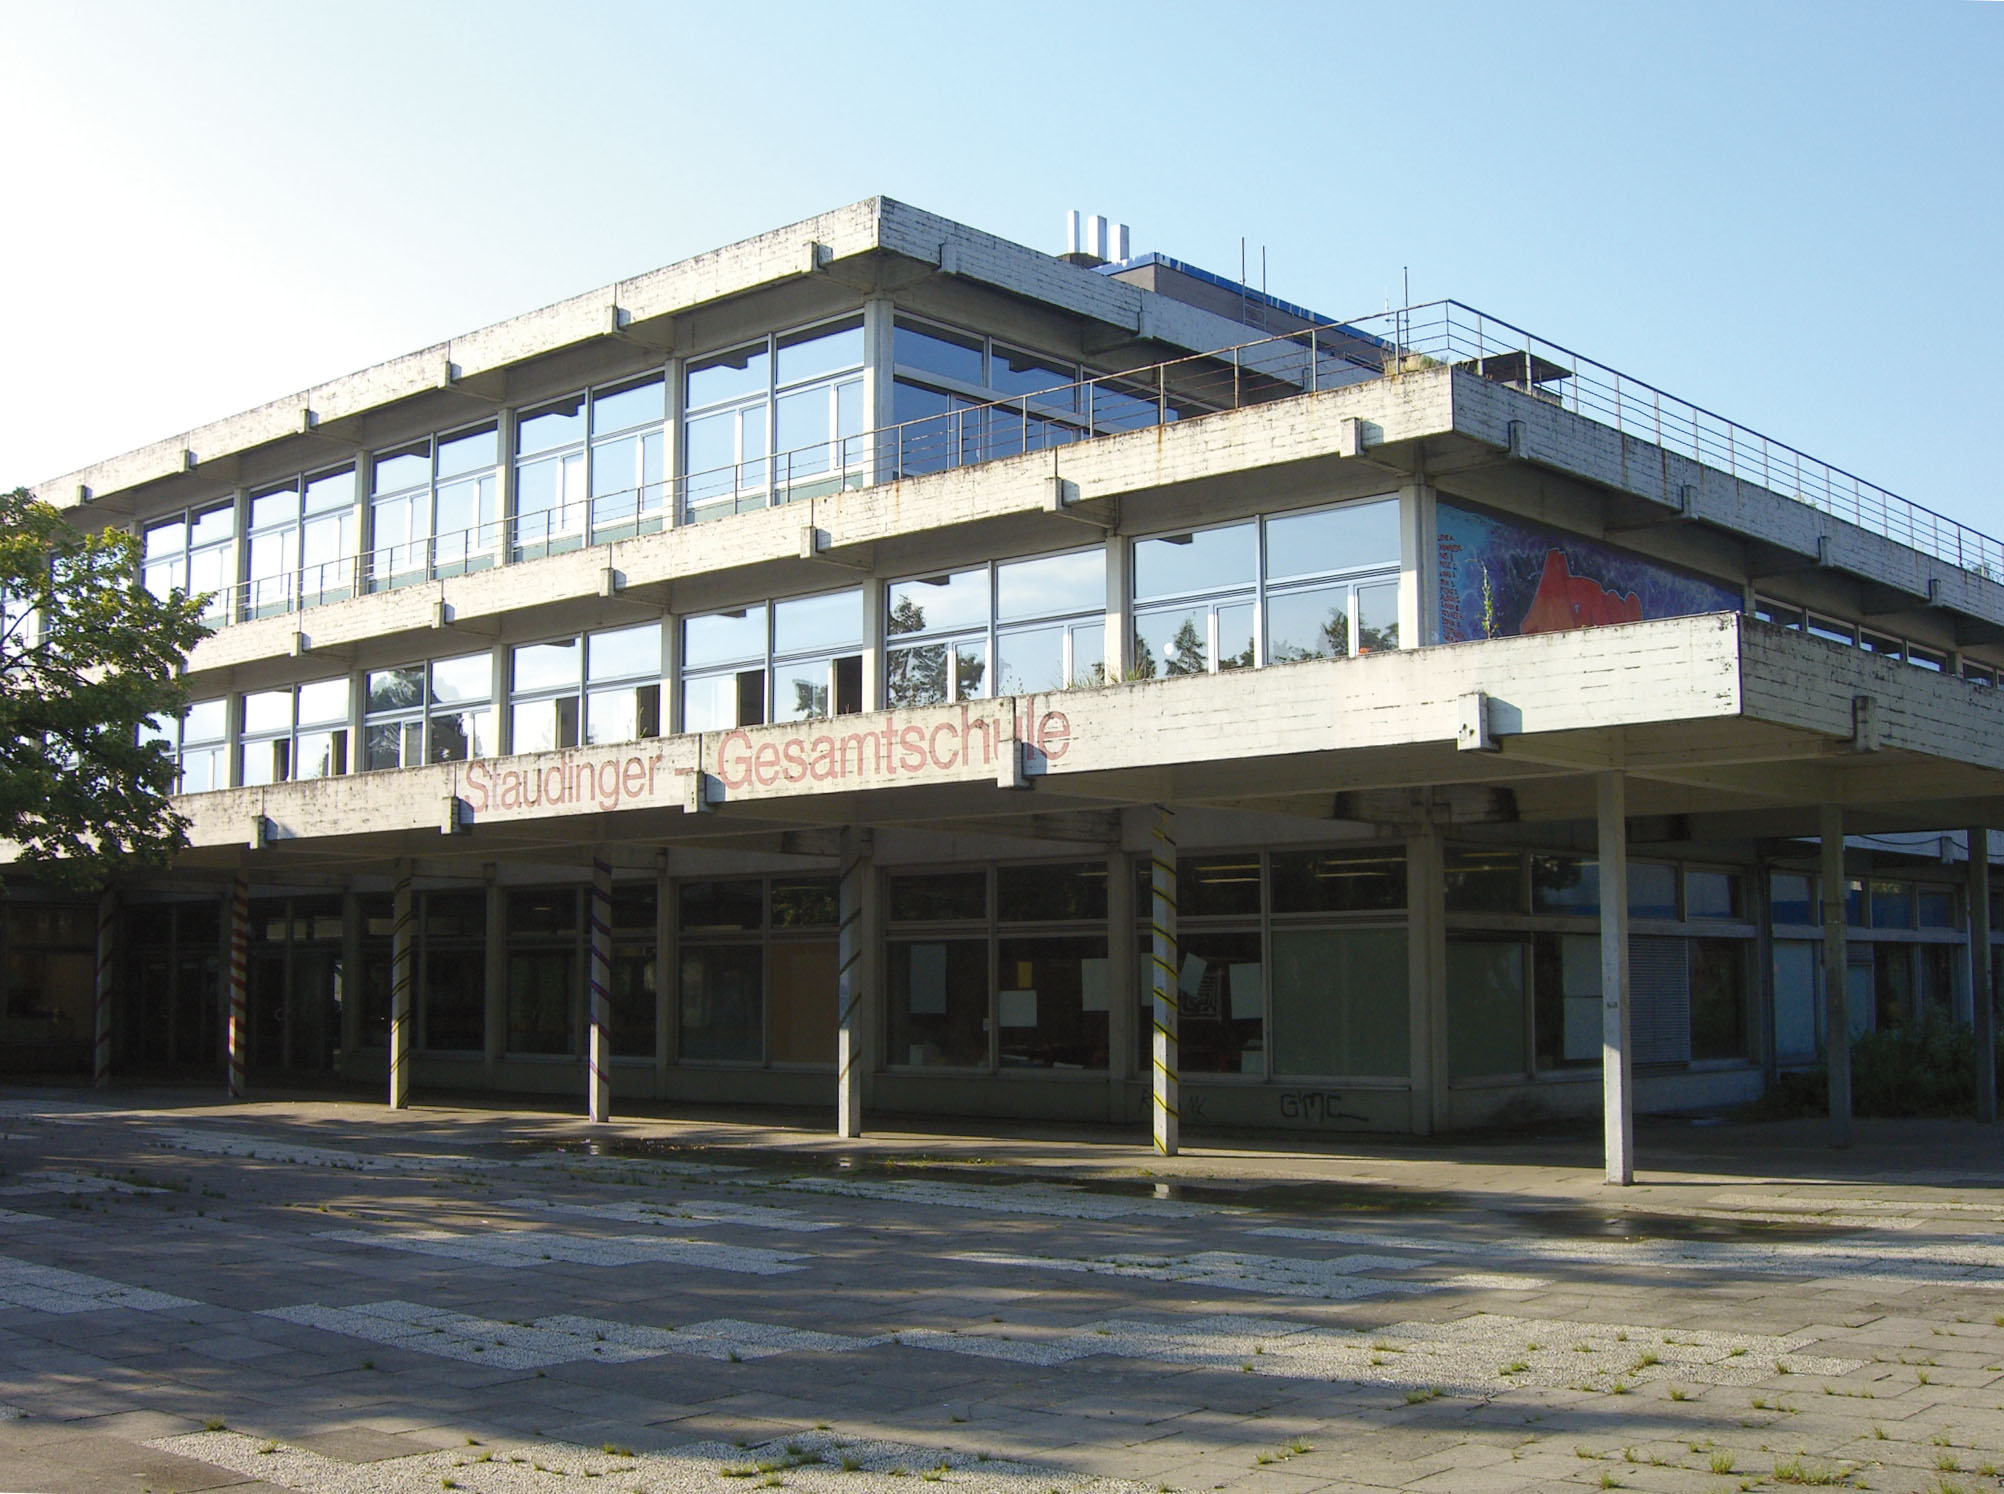 Gebäude der Staudinger Gesamtschule